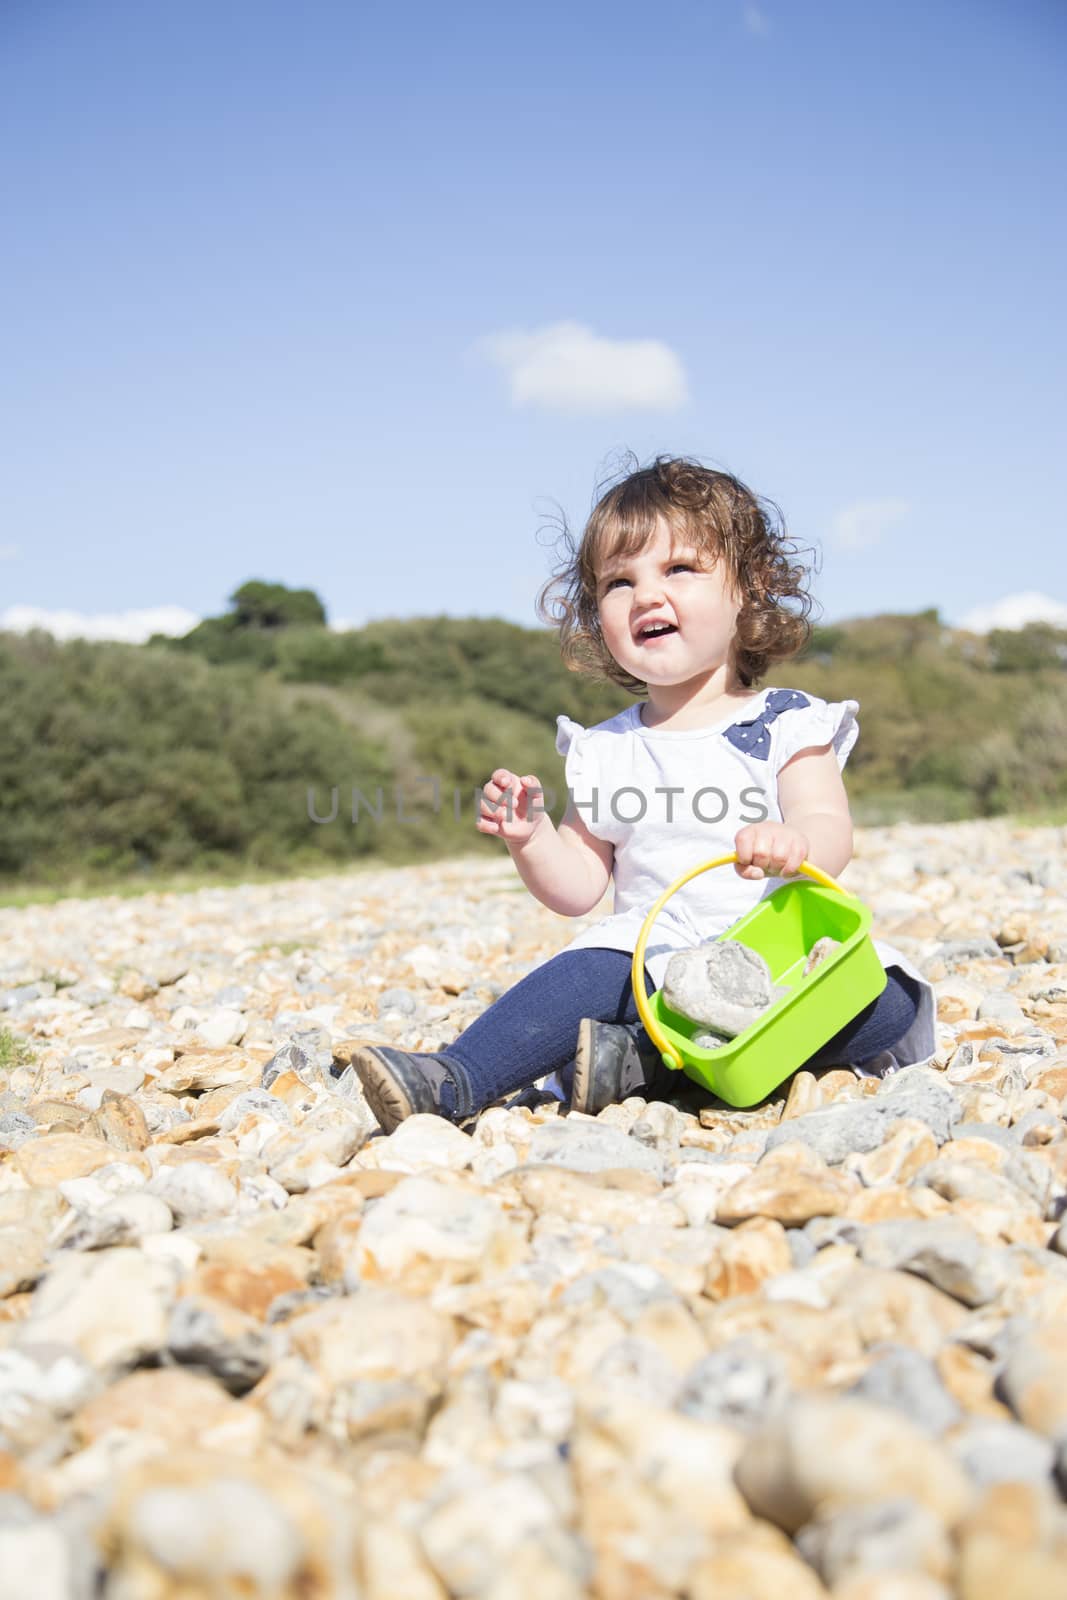 Sitting on a pebble beach